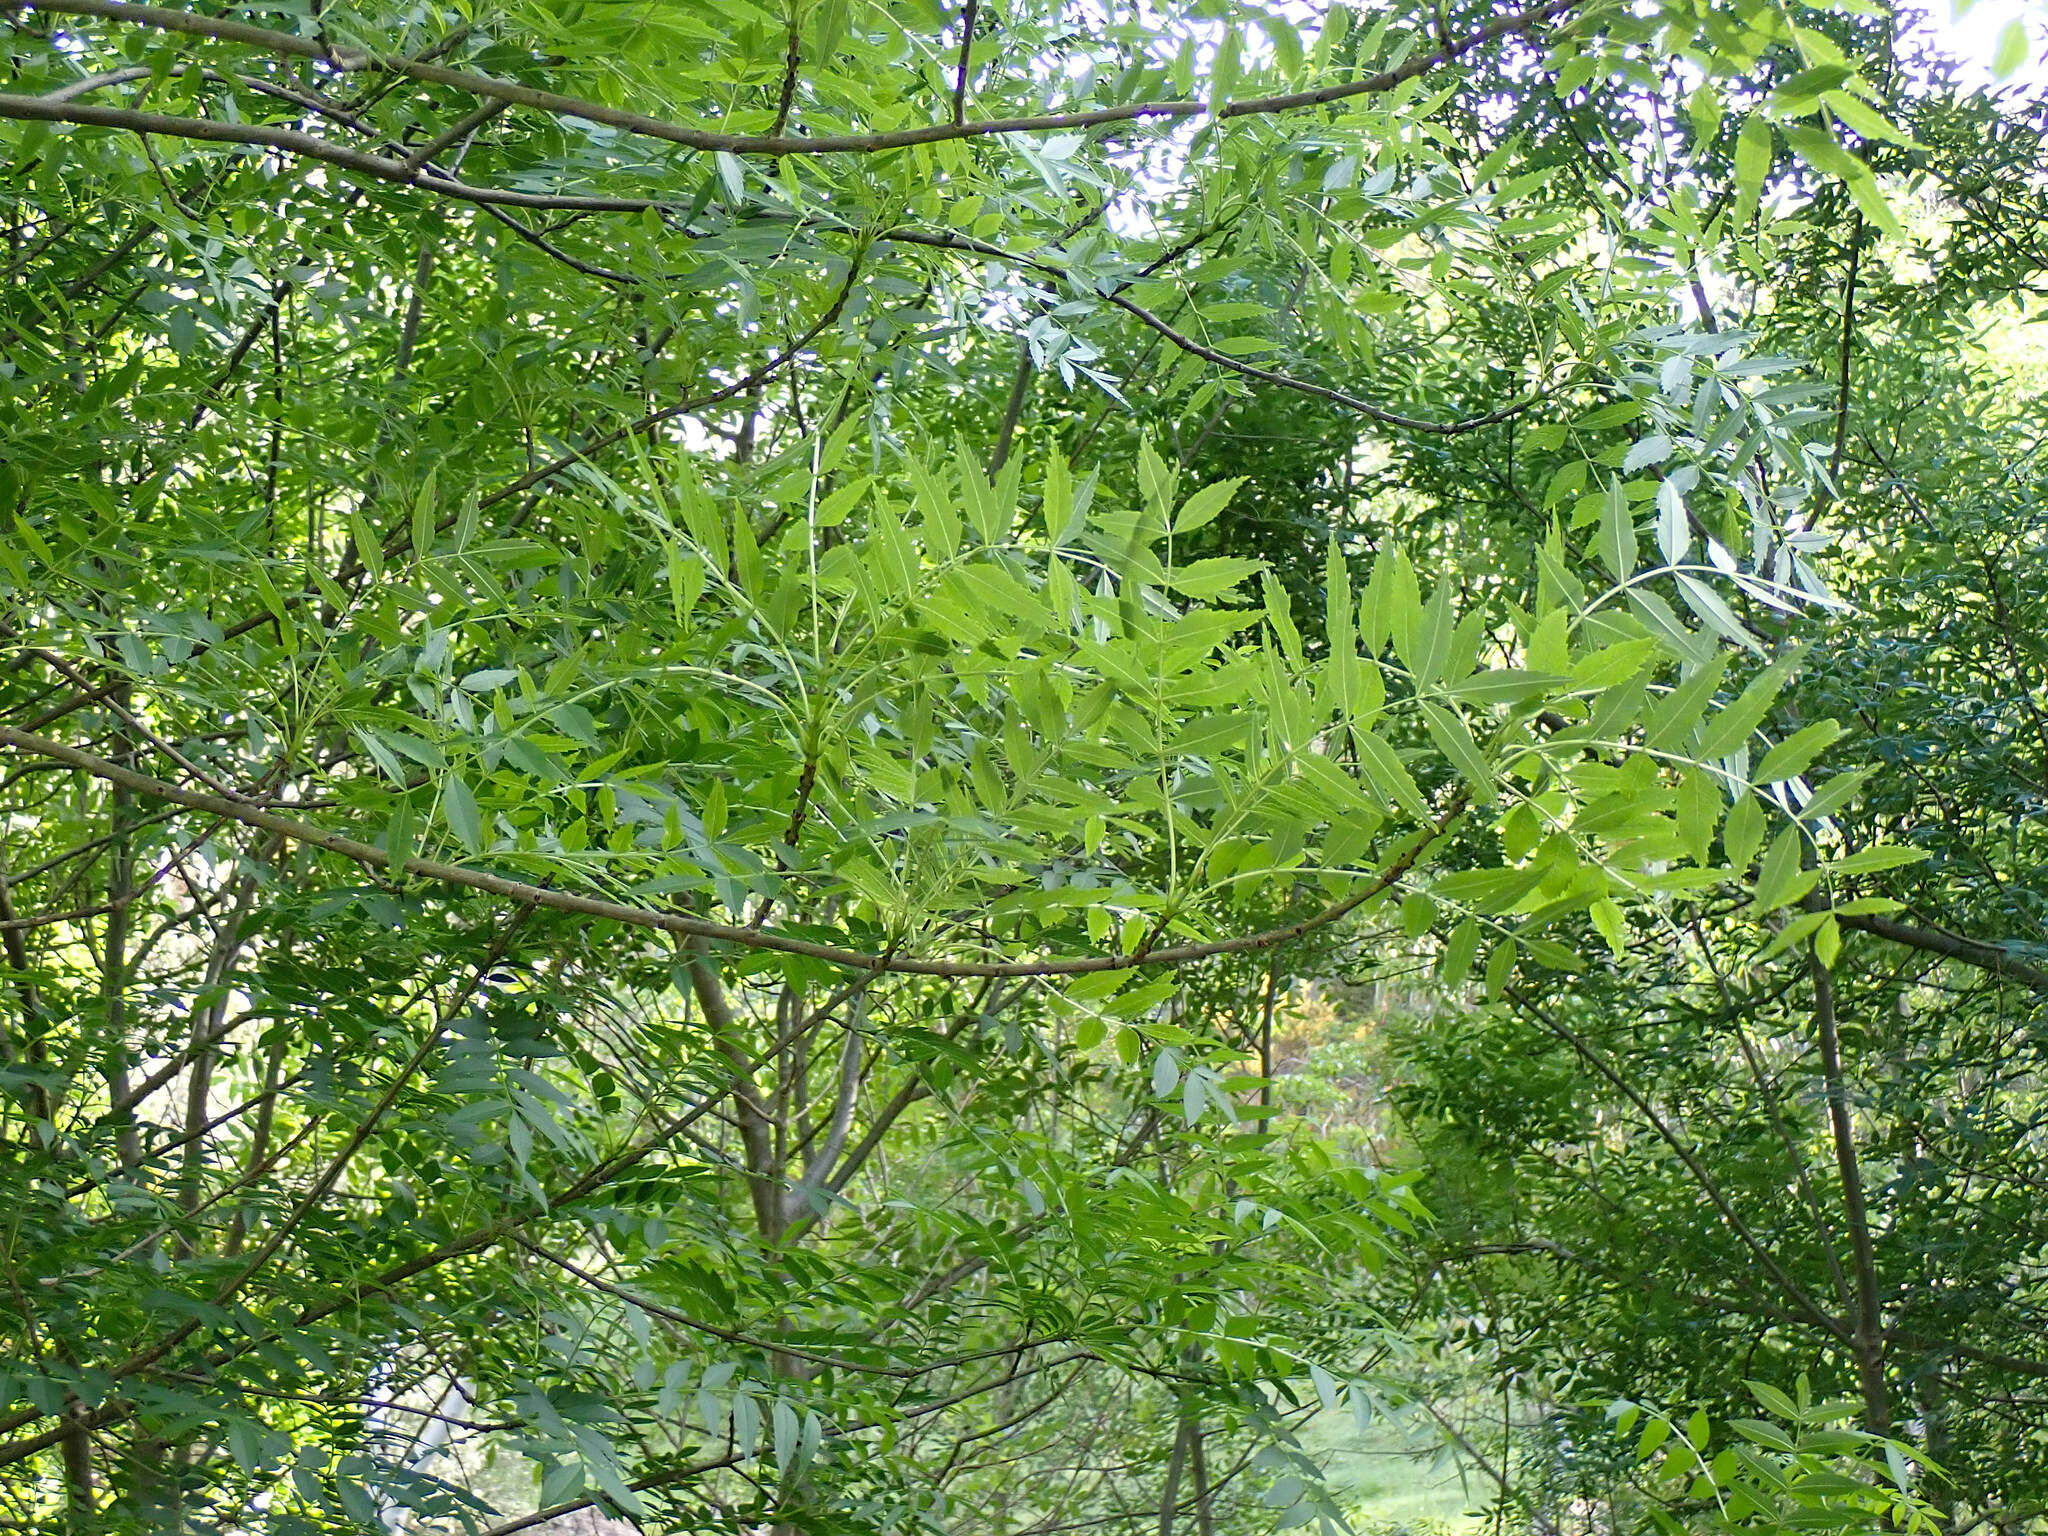 Image of Fraxinus angustifolia subsp. angustifolia